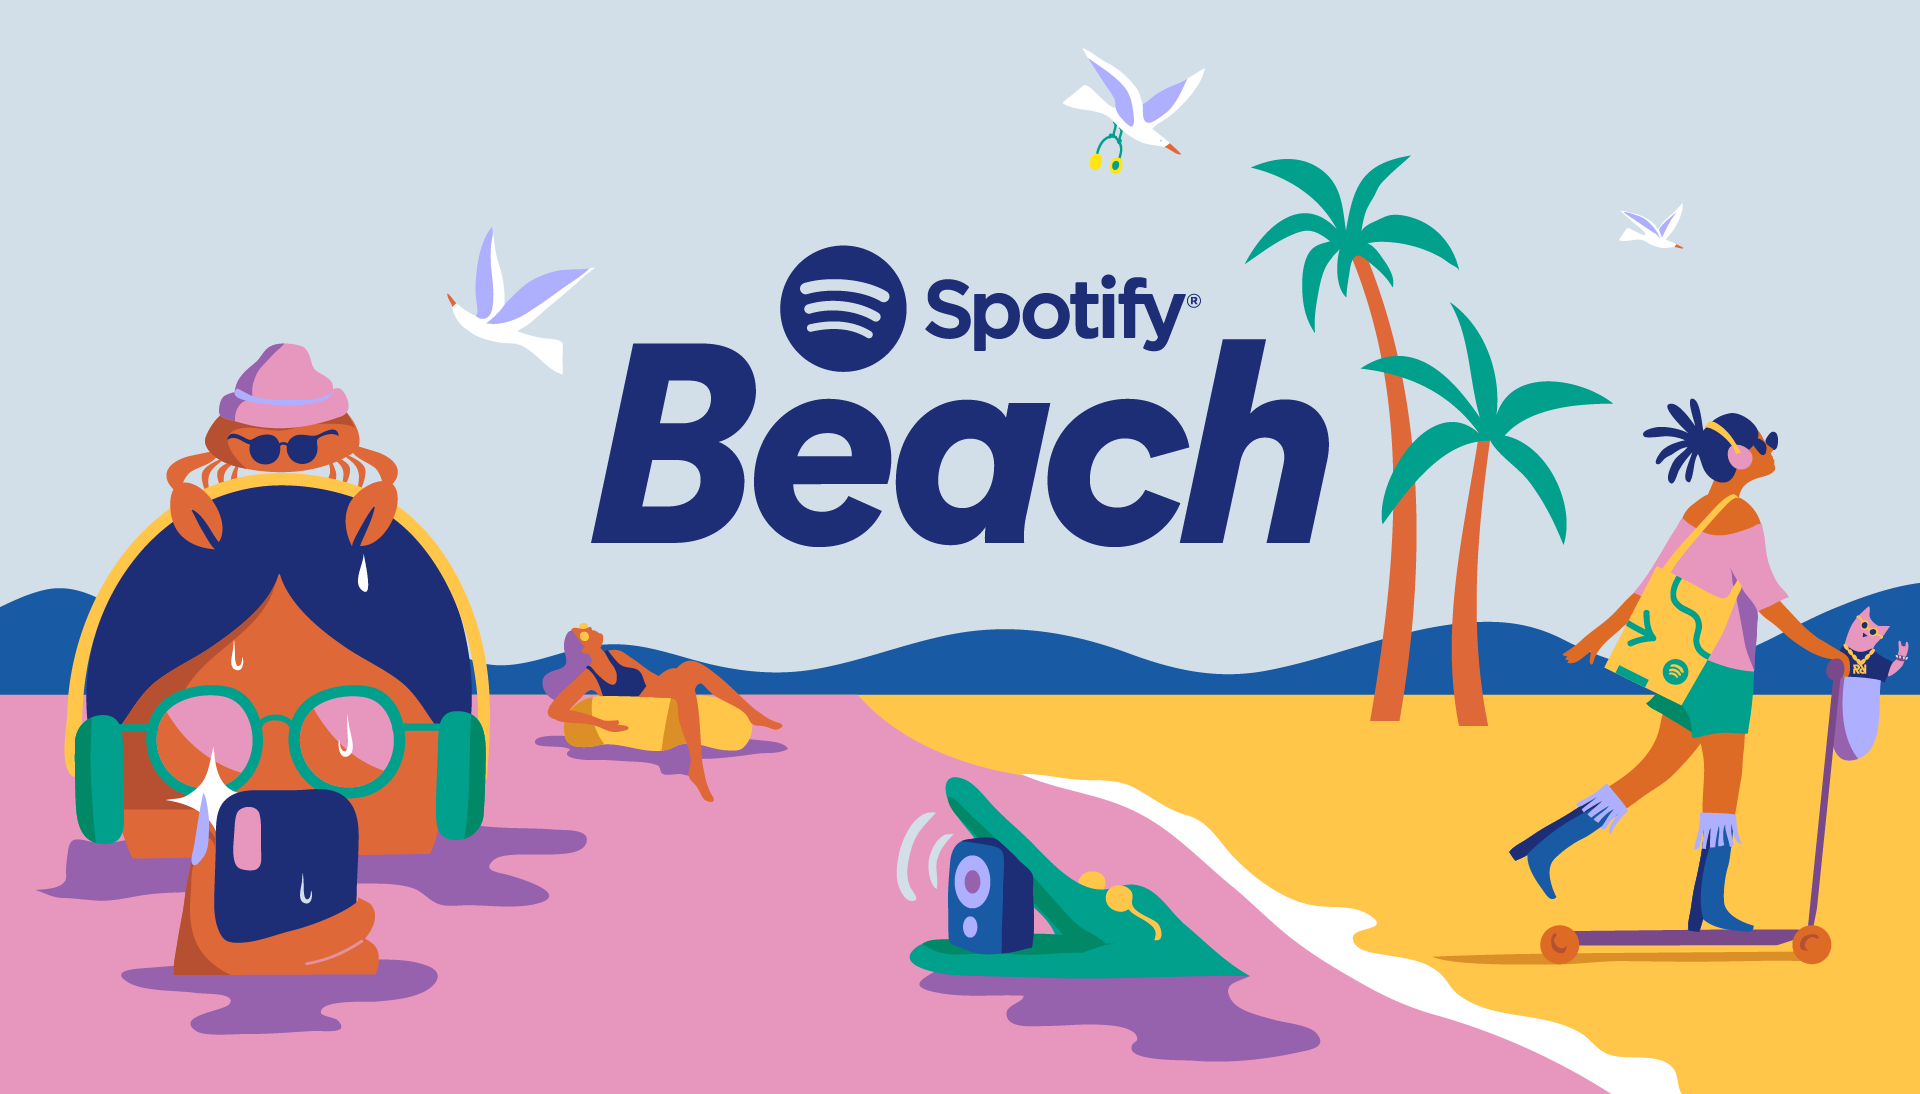 Spotify — Spotify Beach 2023